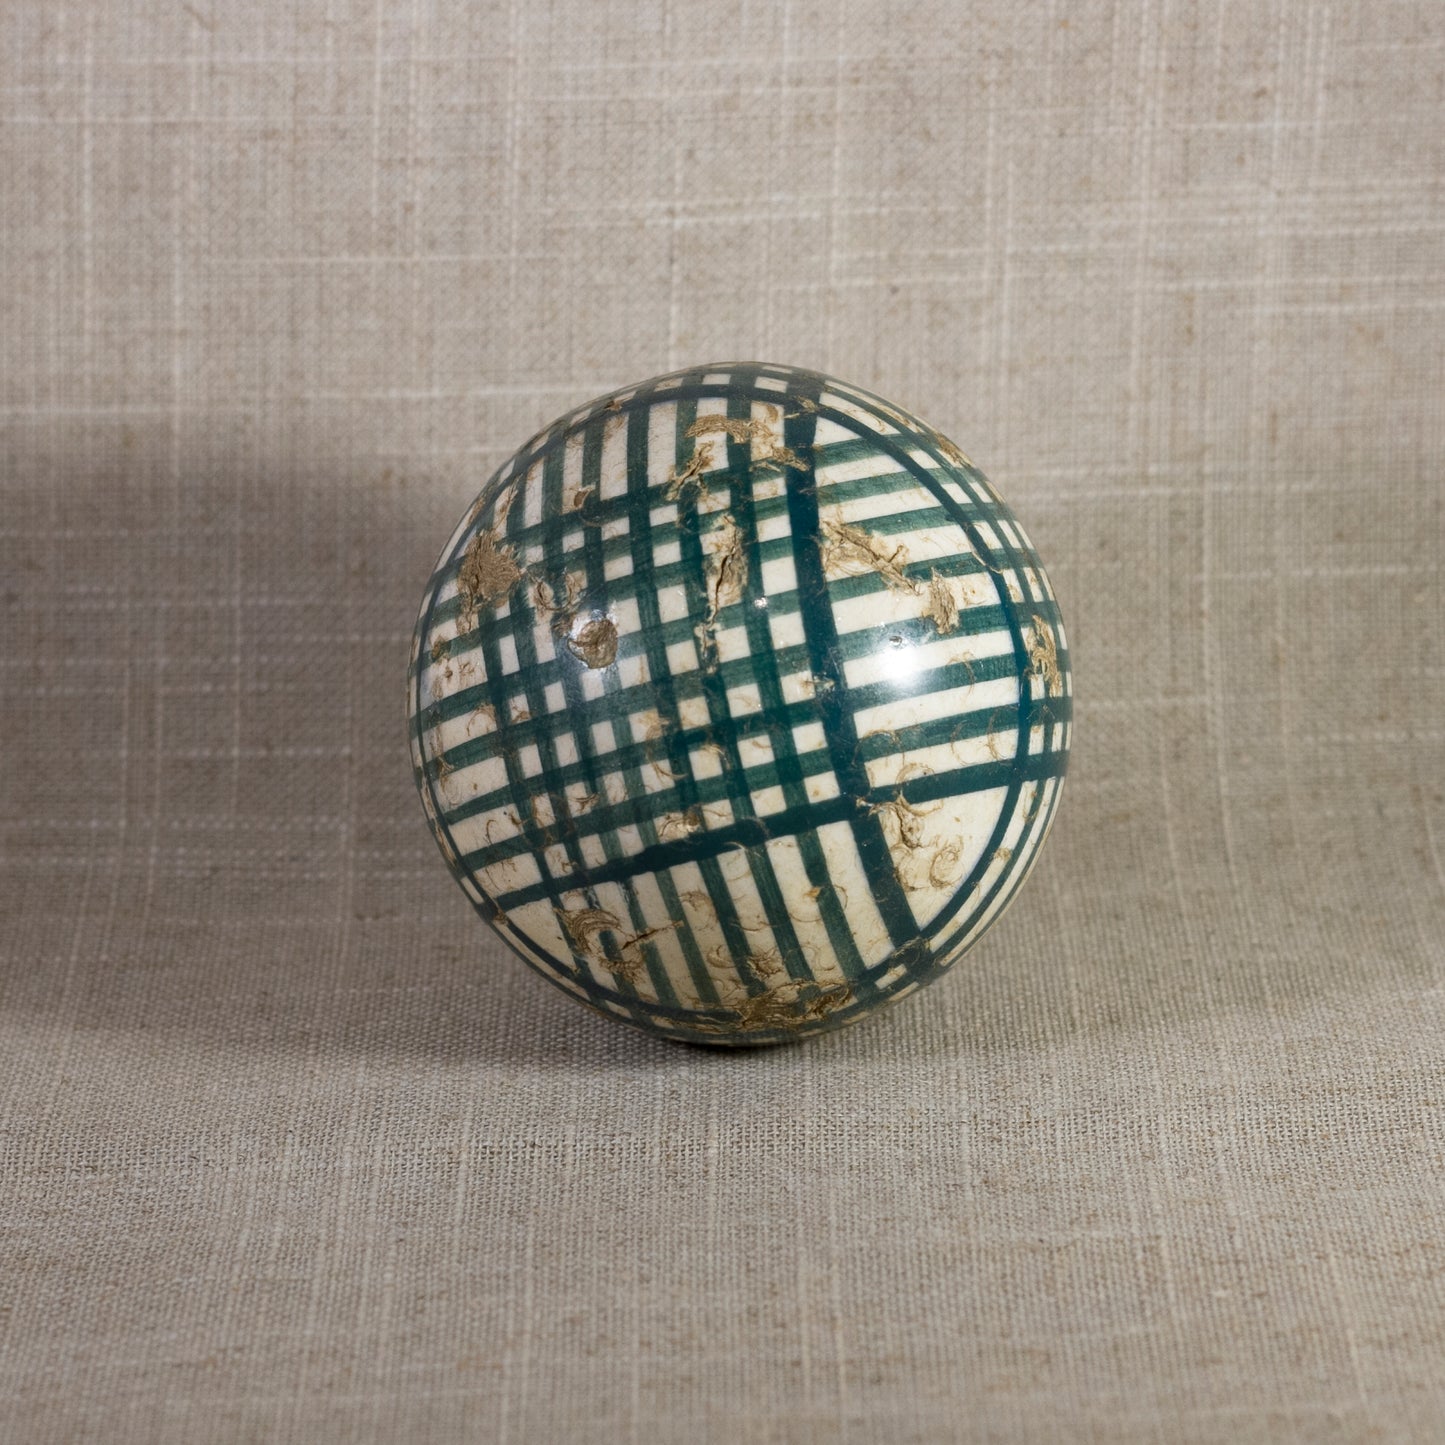 Antique VICTORIAN CARPET BALL with Green Glaze Multiple Crossbands Design 3” Circa 1860 - 1890